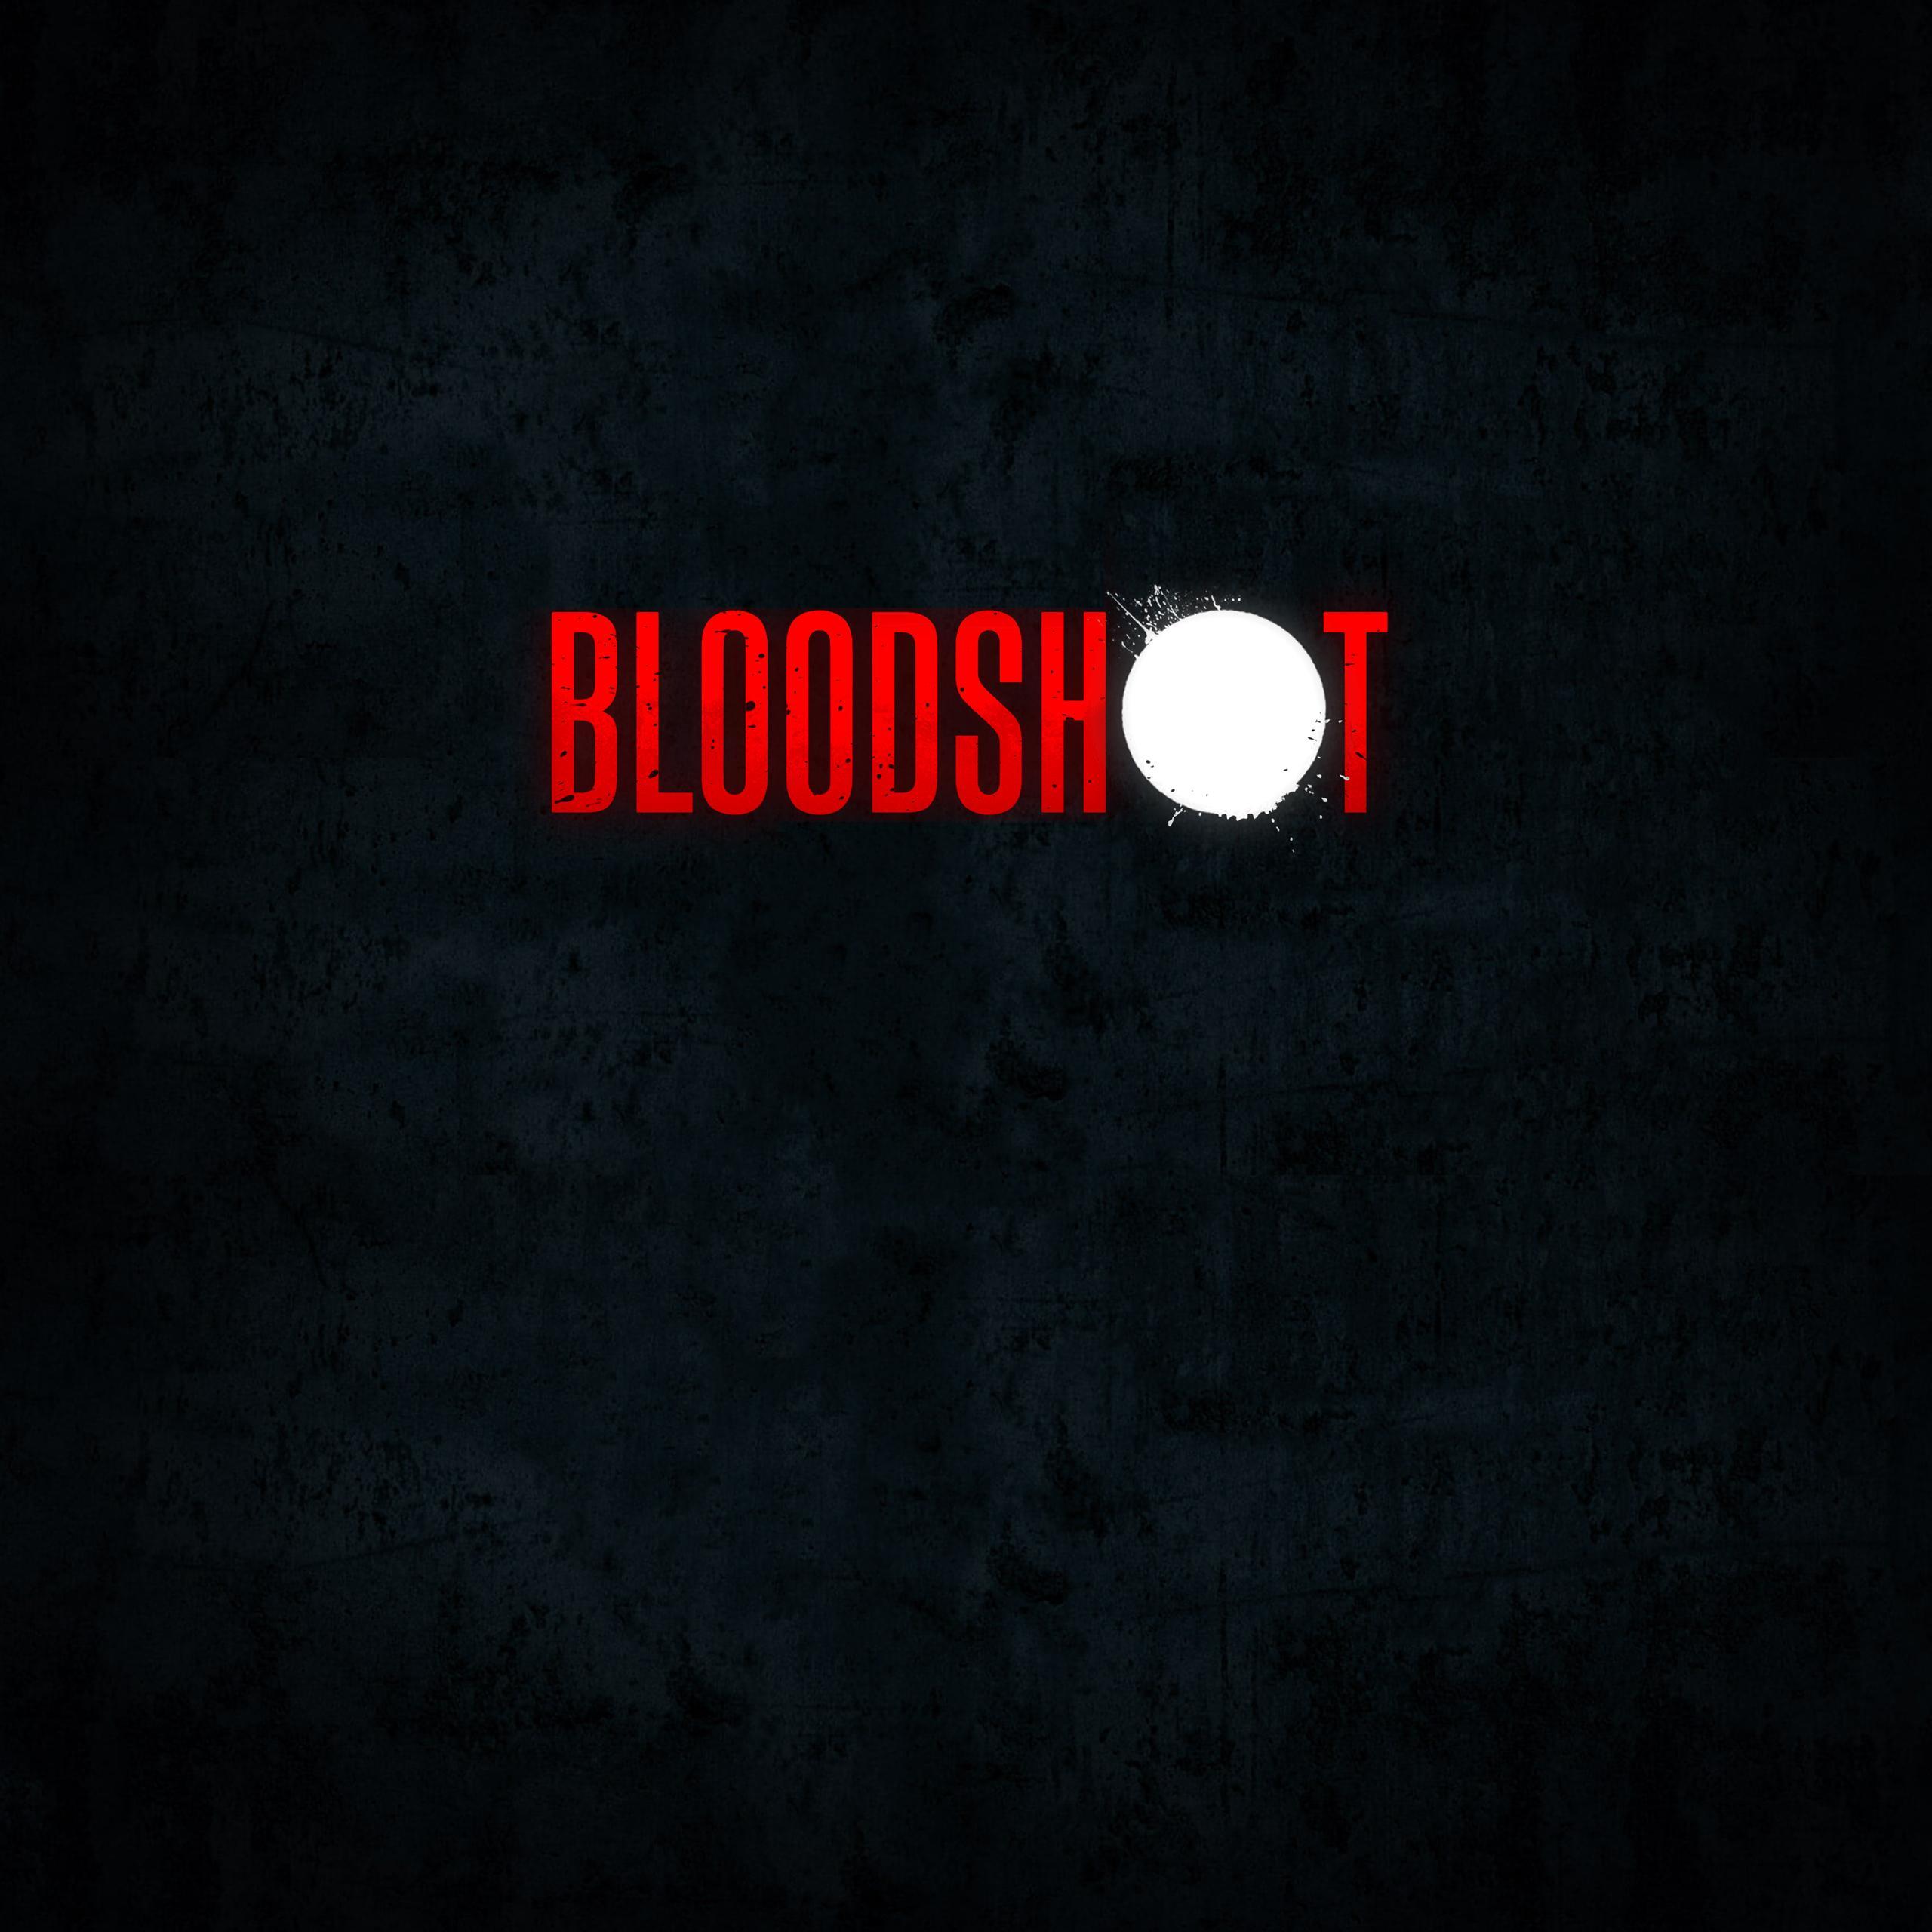 بلادشات (Bloodshot 2020)